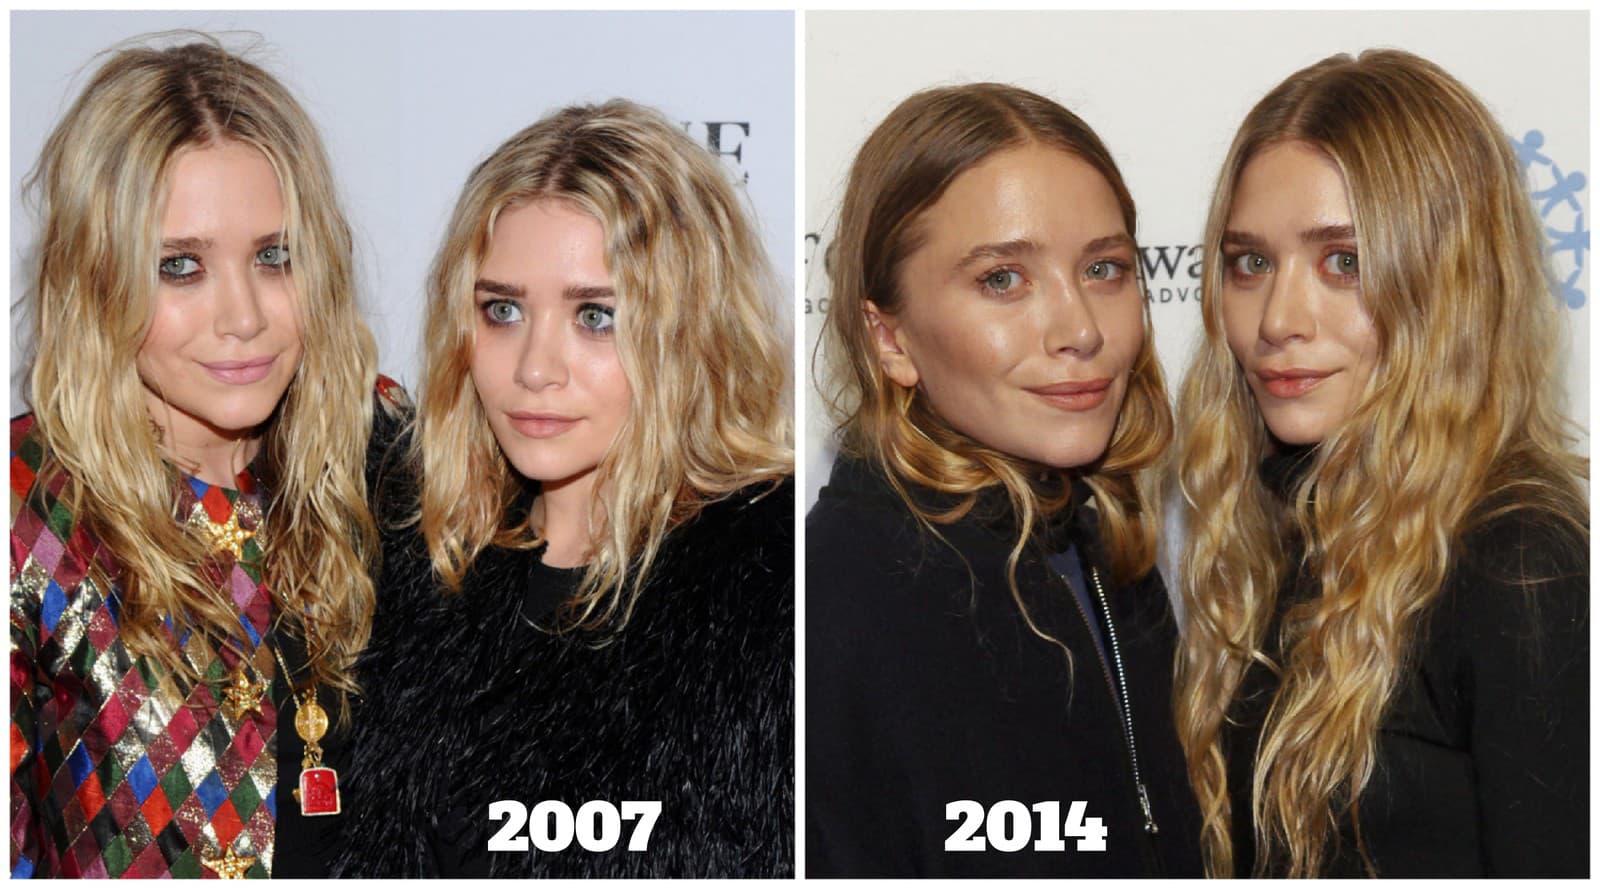 Takto sa zmenili Mary-Kate a Ashley Olsen